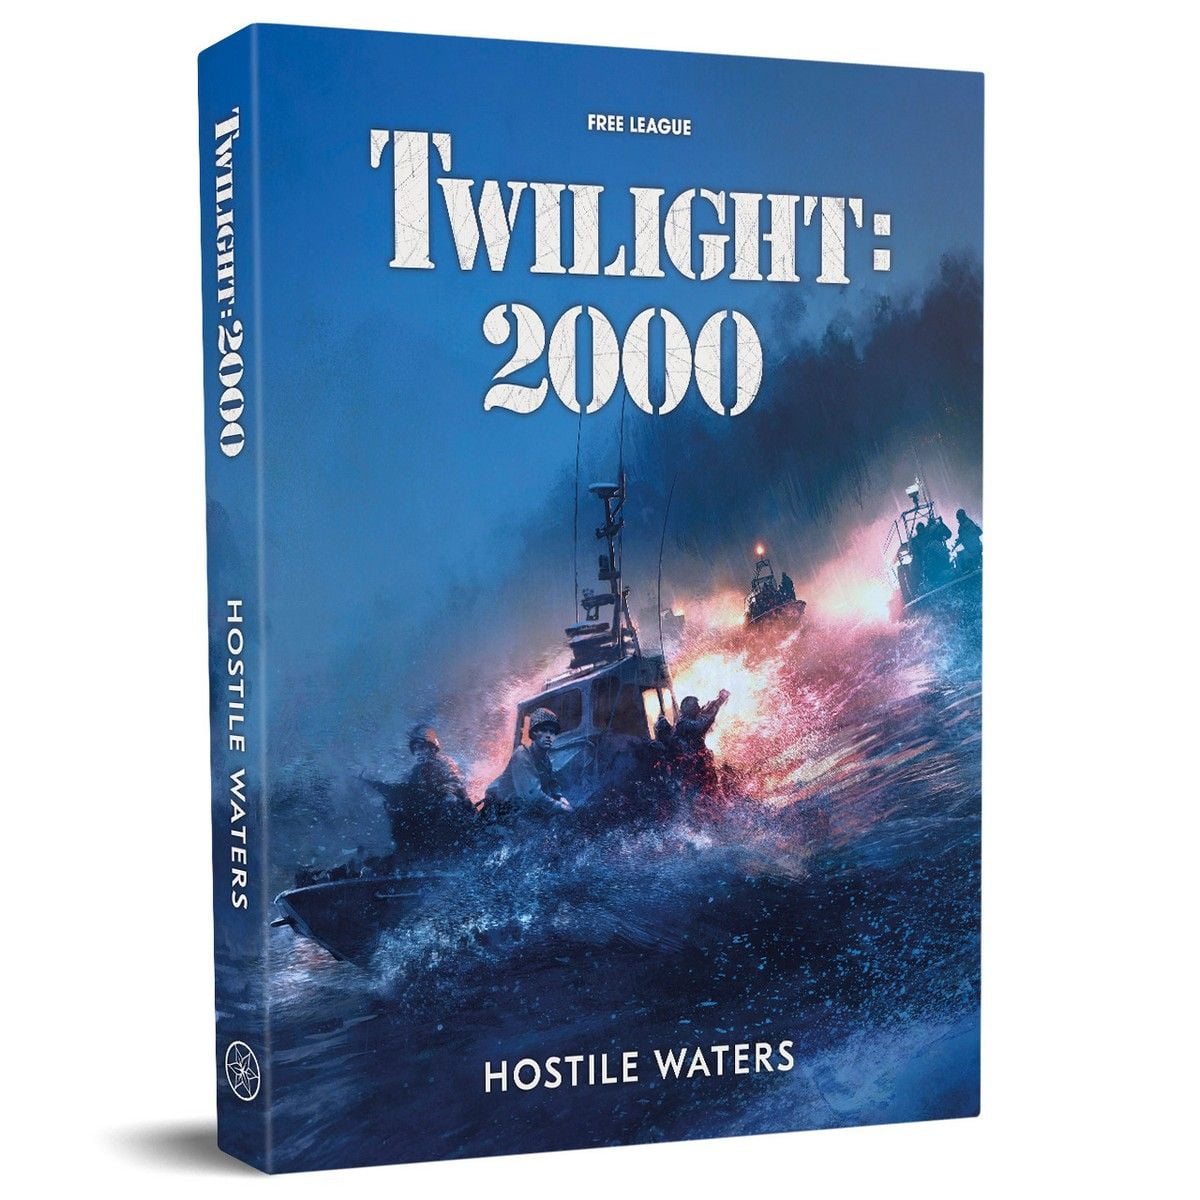 Twilight: 2000 - Hostile Waters